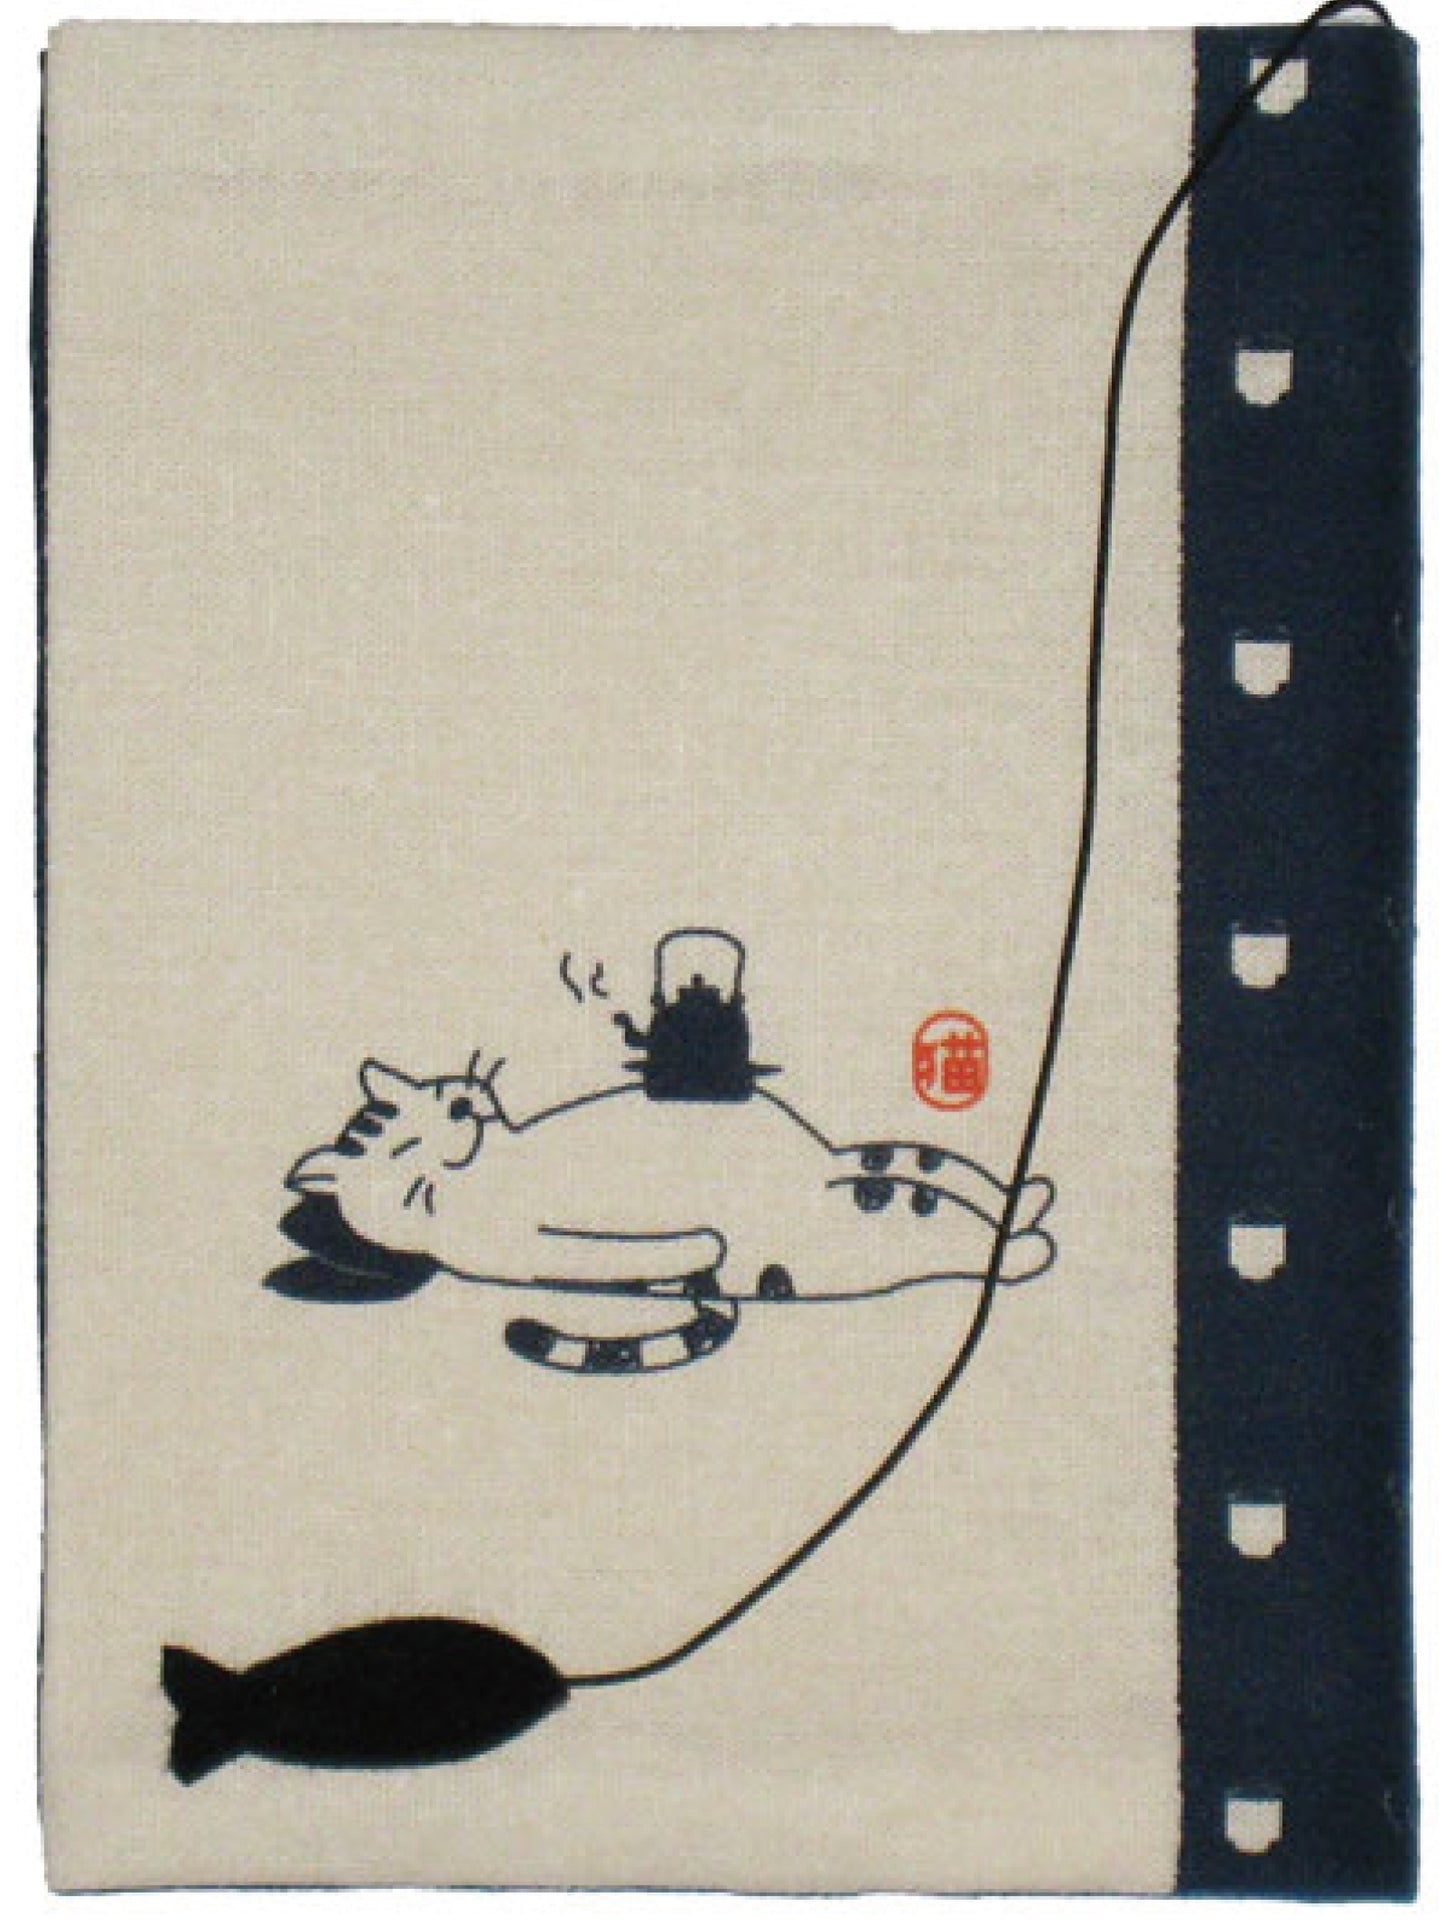 sheepsleep ブックカバー 文庫判「へそで茶を沸かす」 日本製